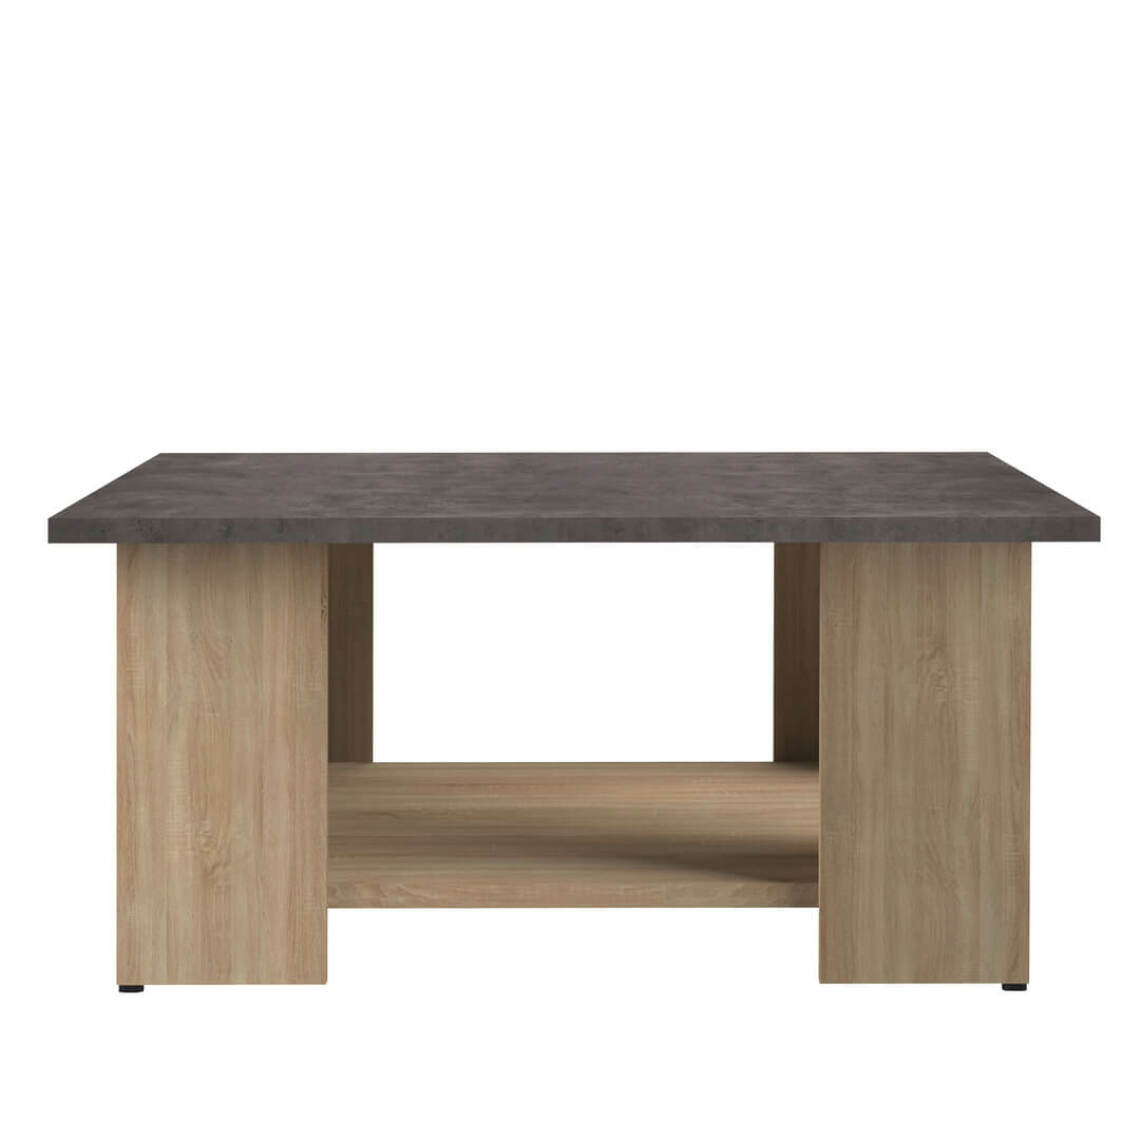 Temahome - Table basse SQUARE 67 X 67 - chêne naturel et béton - Tables basses